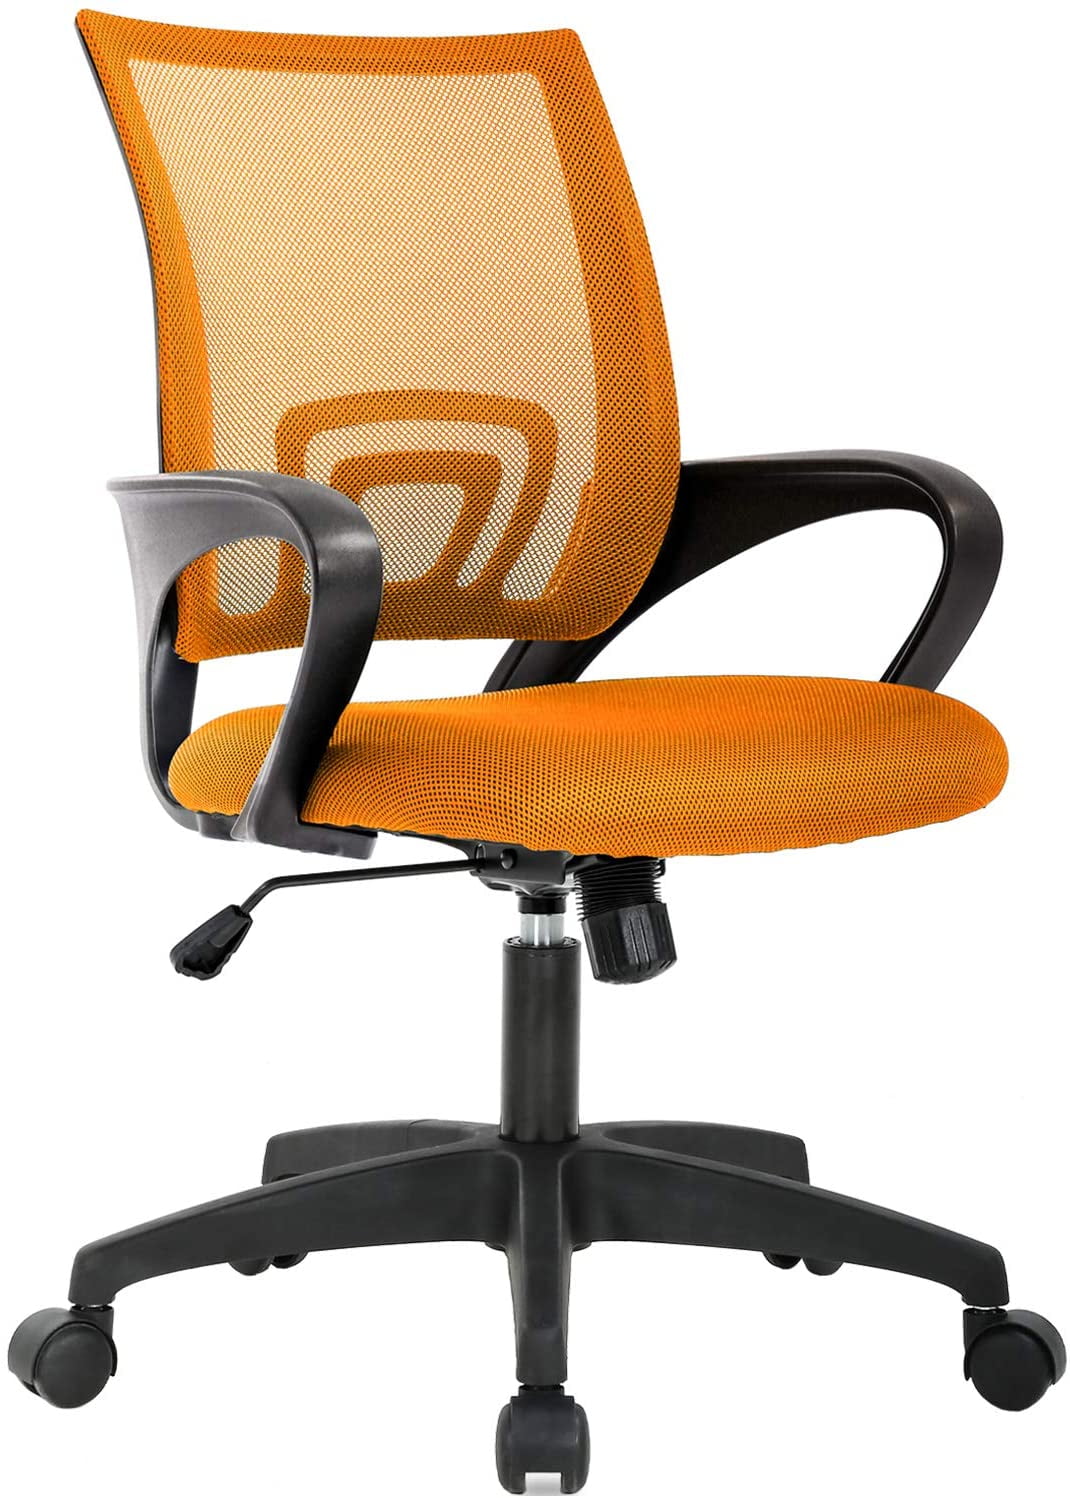 Mesh Office Chair Swivel Mid Back Adjustable Ergonomic Desk Computer Chairs 